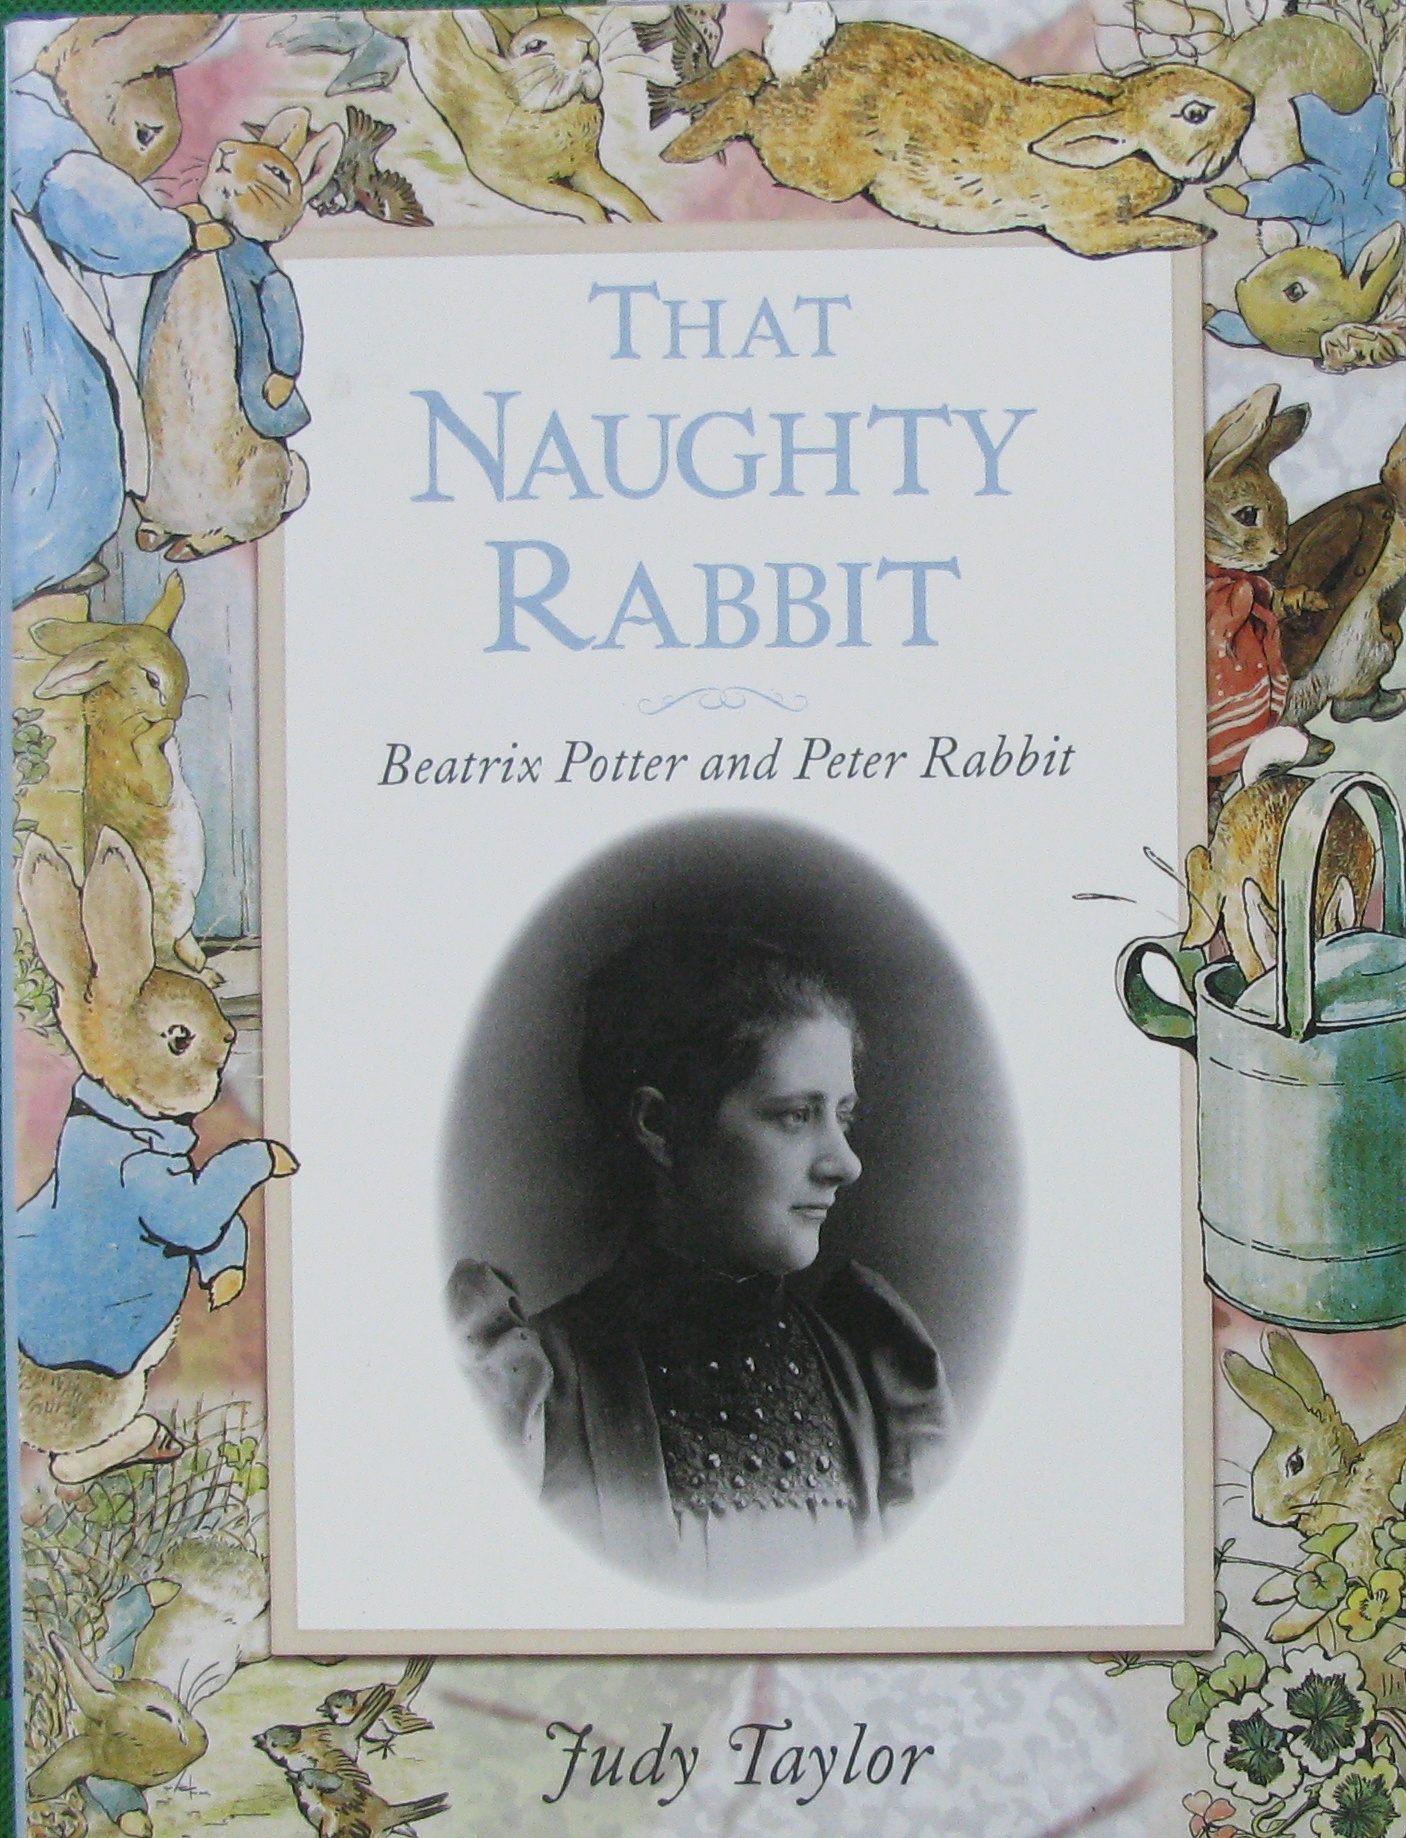 that naughty rabbit: beatrix potter and peter rabbit